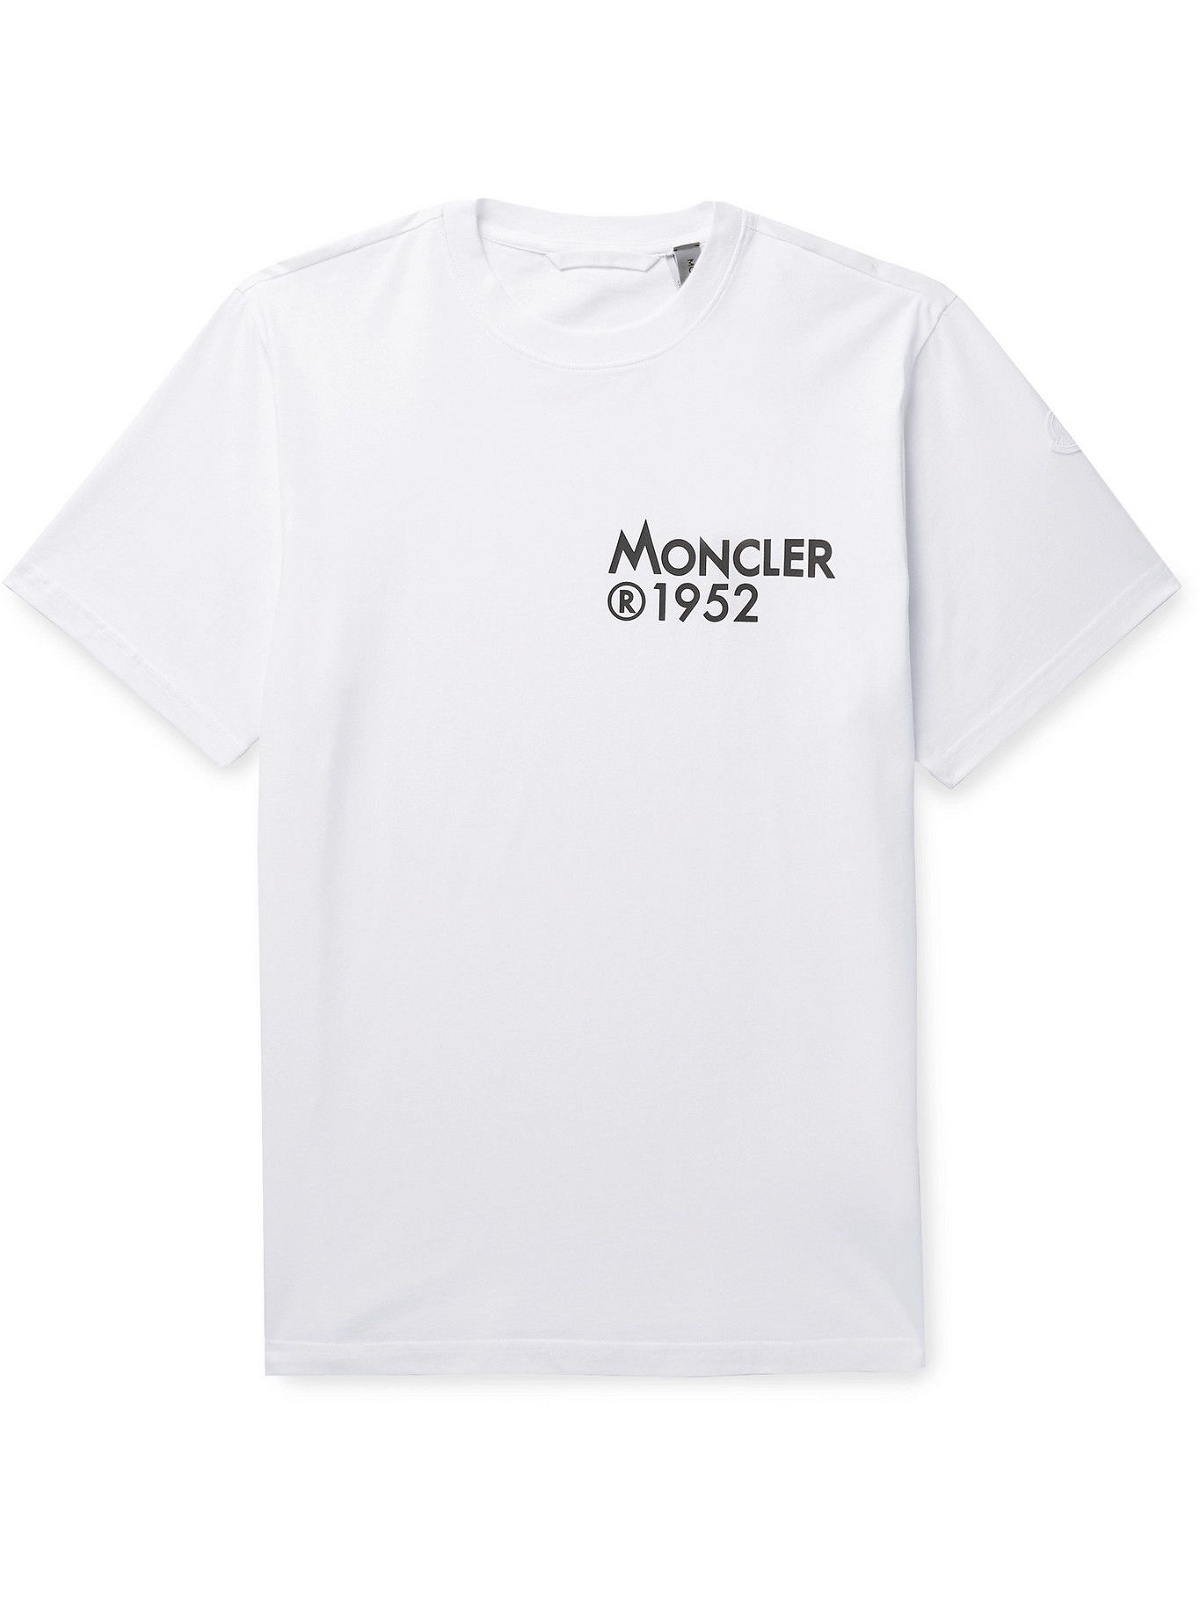 Moncler Genius - 2 Moncler 1952 Logo-Print Cotton-Jersey T-Shirt ...